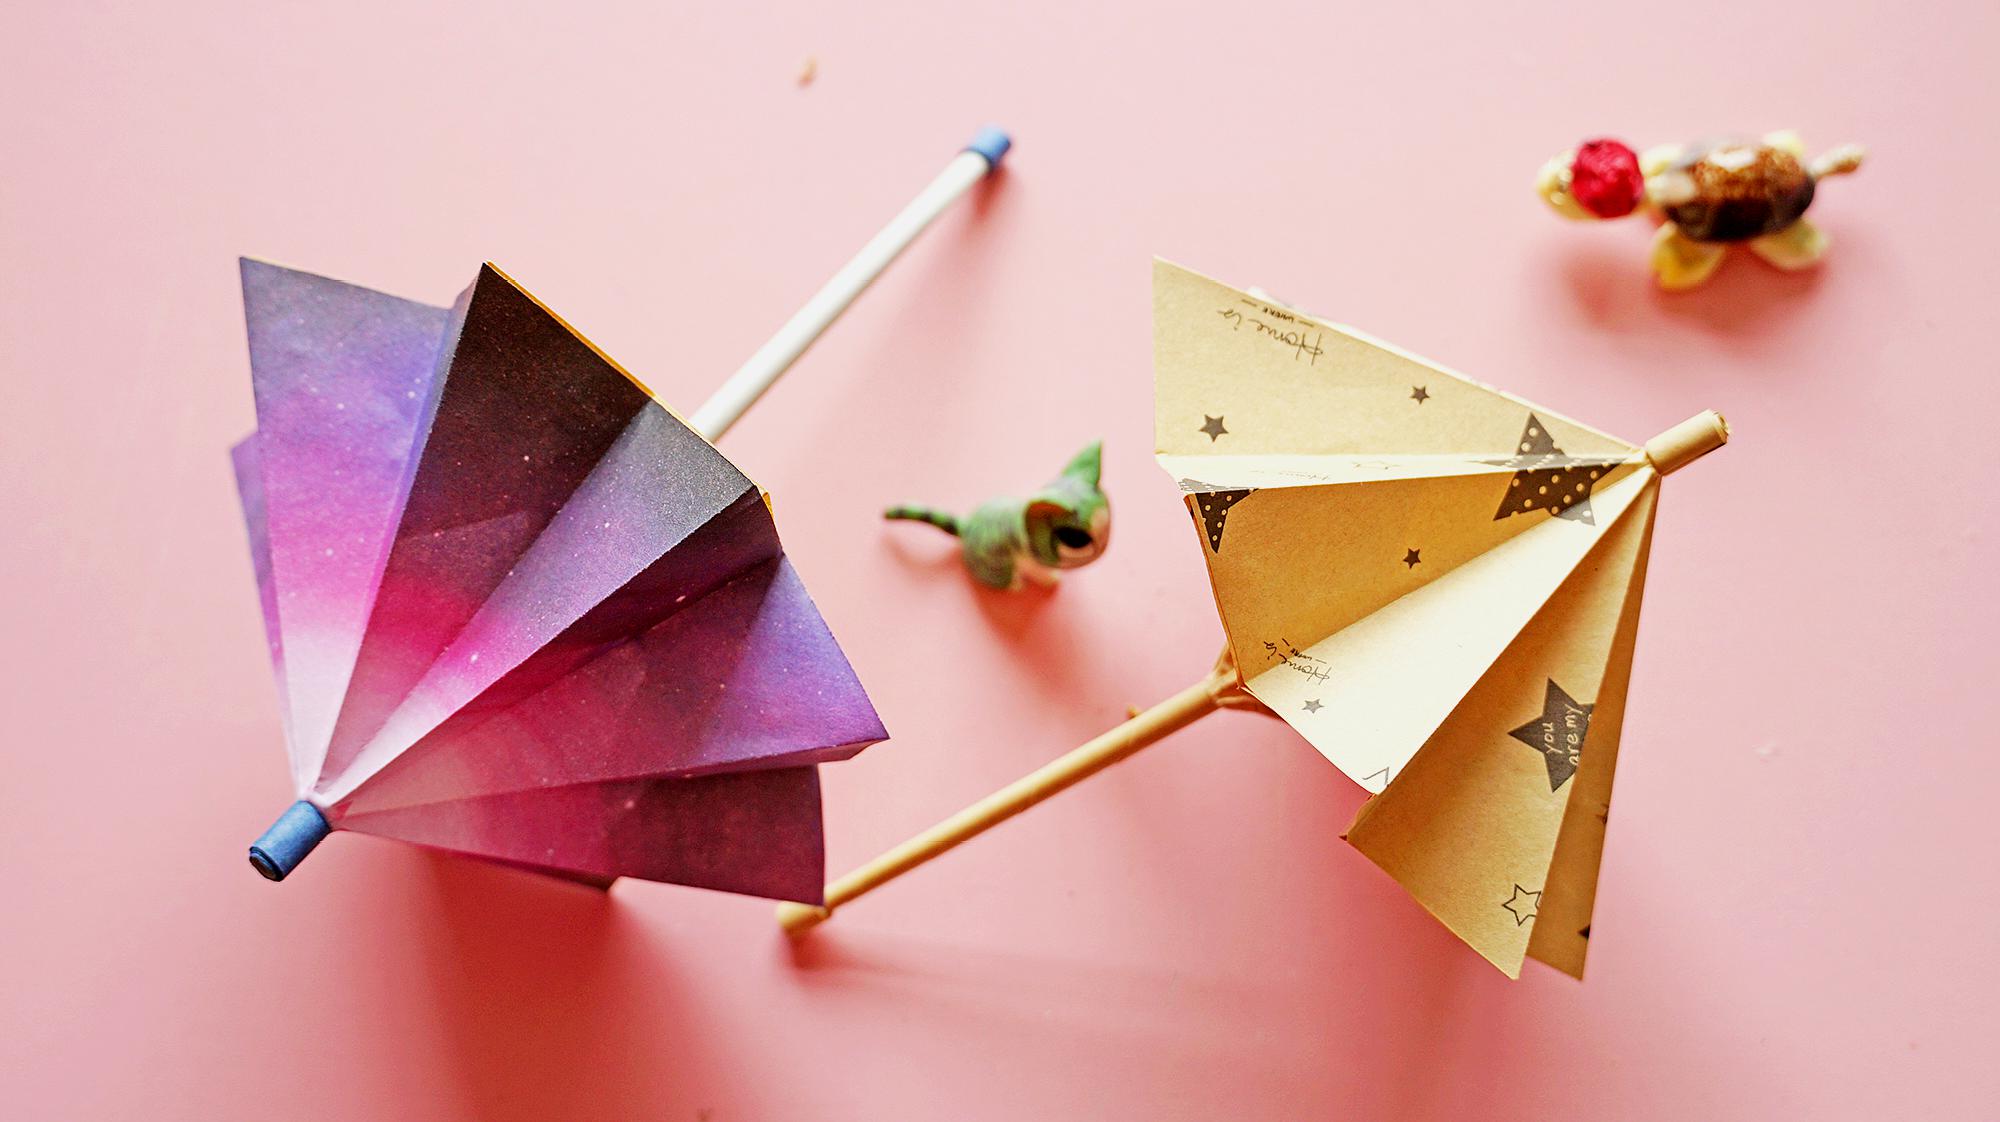 【折纸-教程】用正方形纸折个纸飞机，能飞，包会√_哔哩哔哩 (゜-゜)つロ 干杯~-bilibili